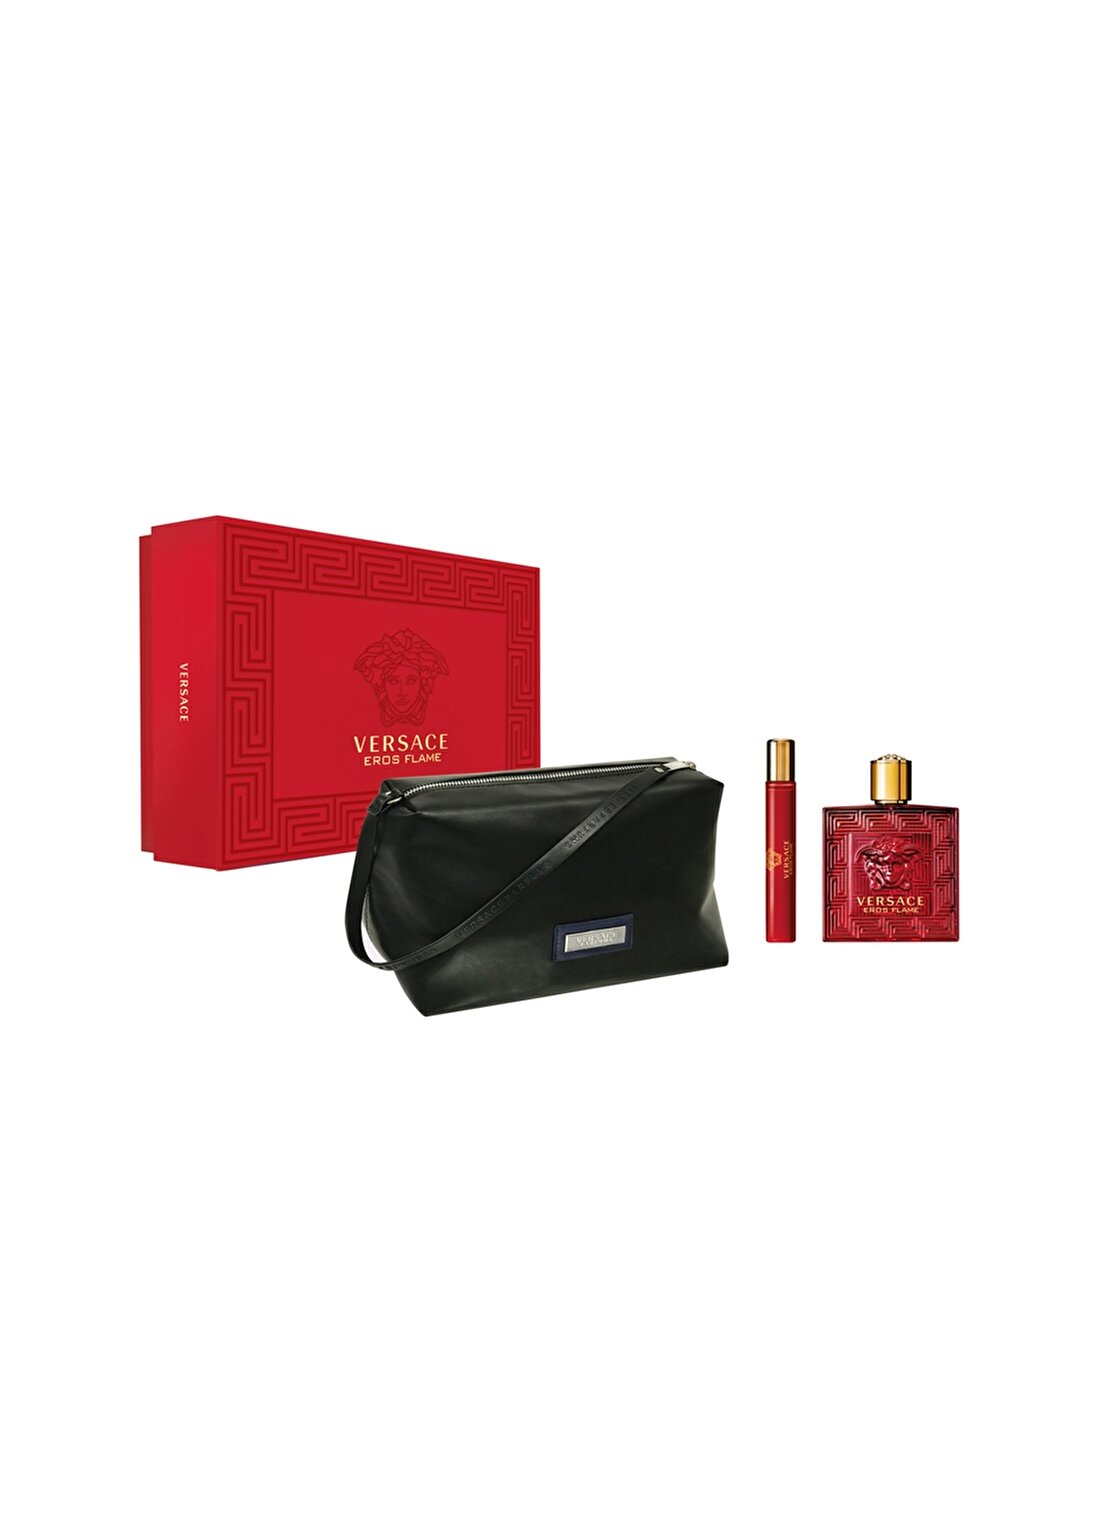 Versace Eros Flame Parfüm Set